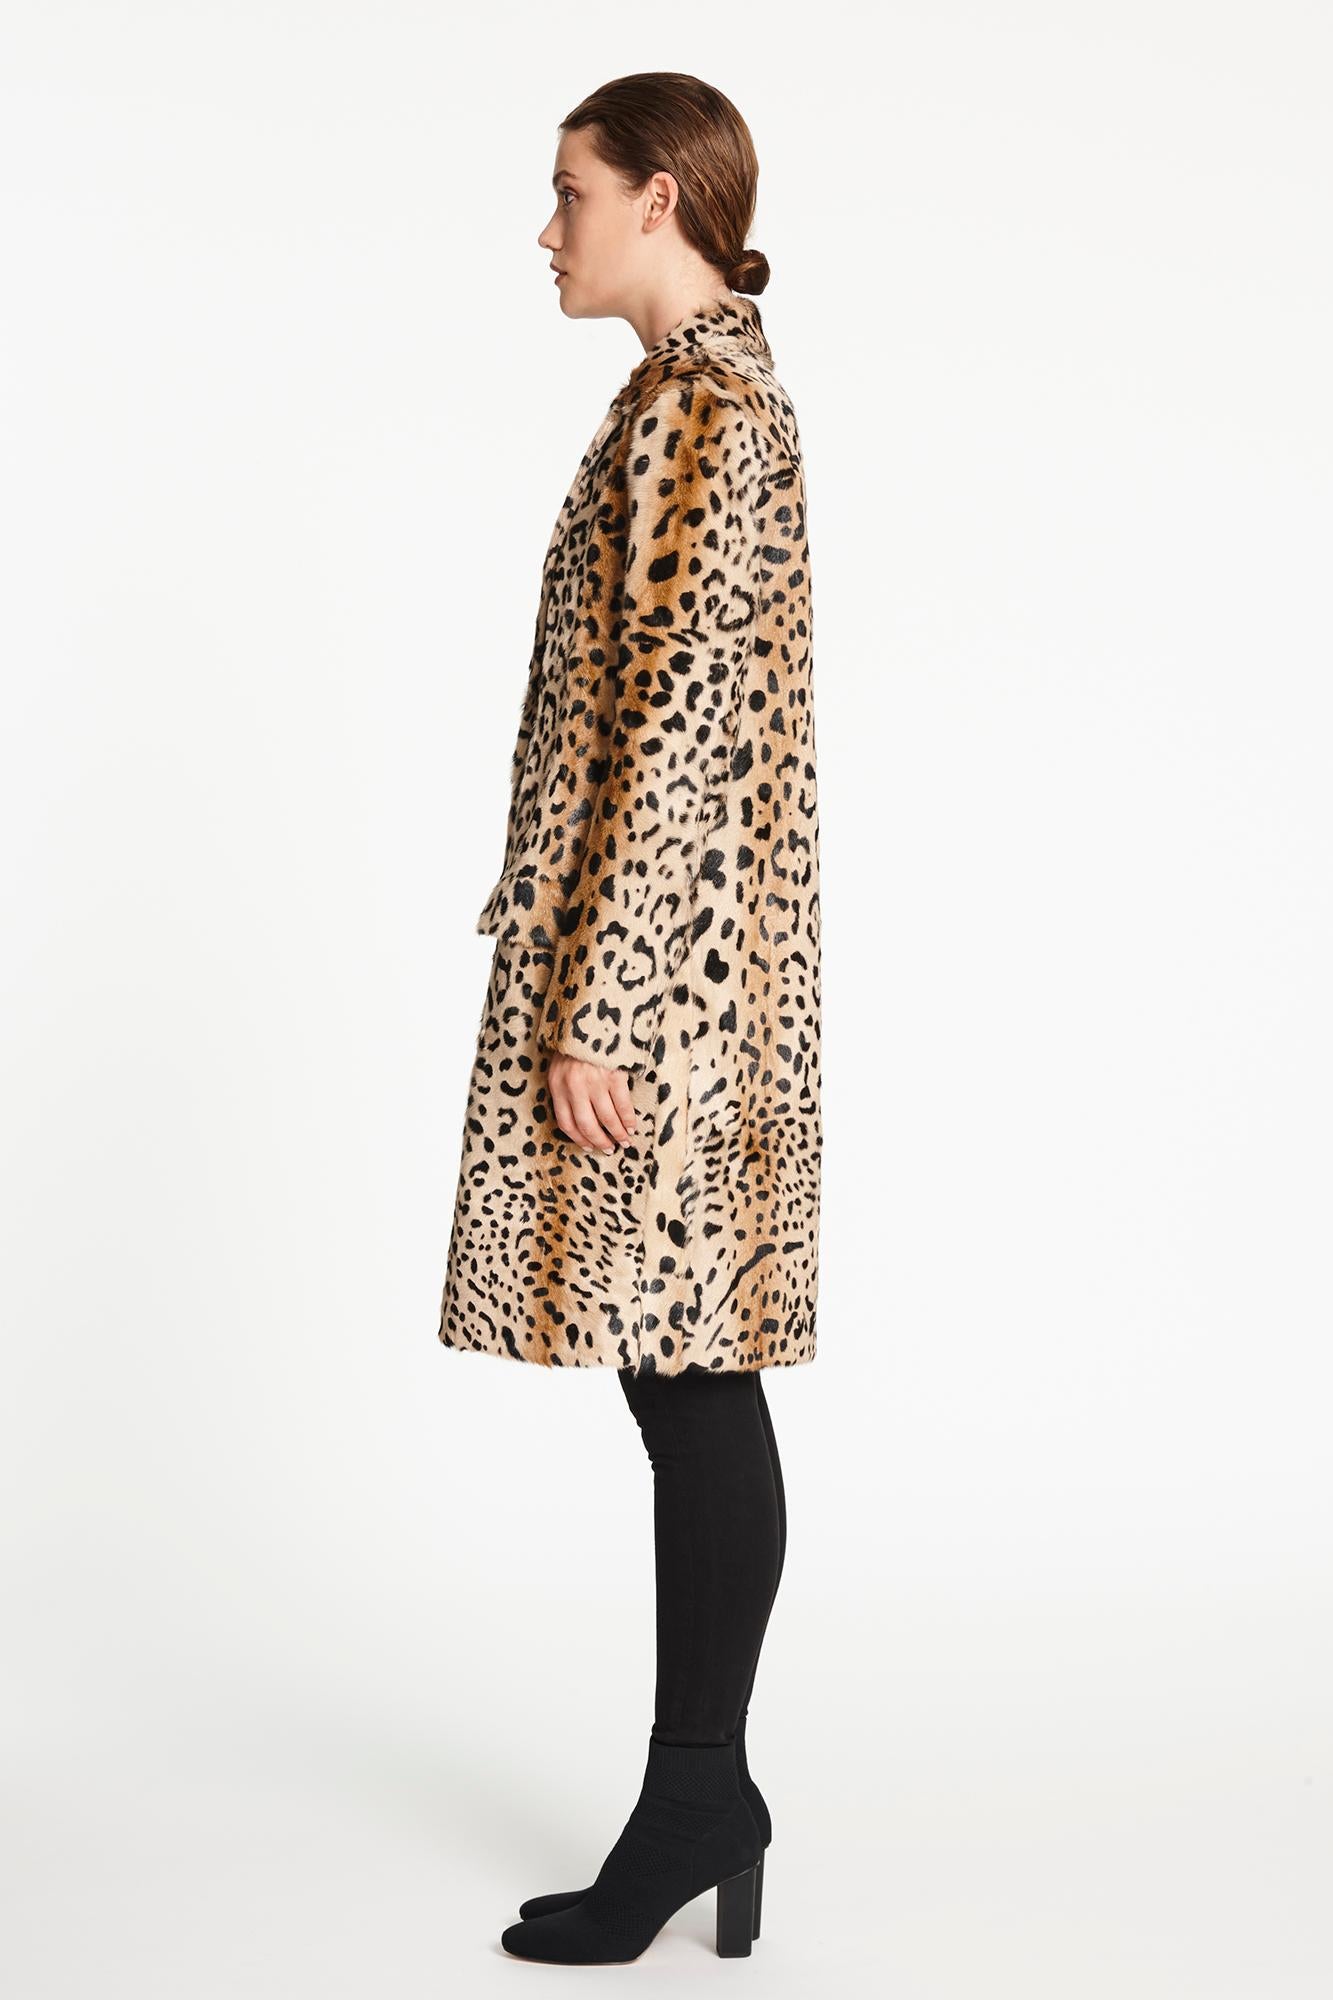 Verheyen London Leopard Print Coat in Red Ruby Goat Hair Fur UK 12  - Brand New  4